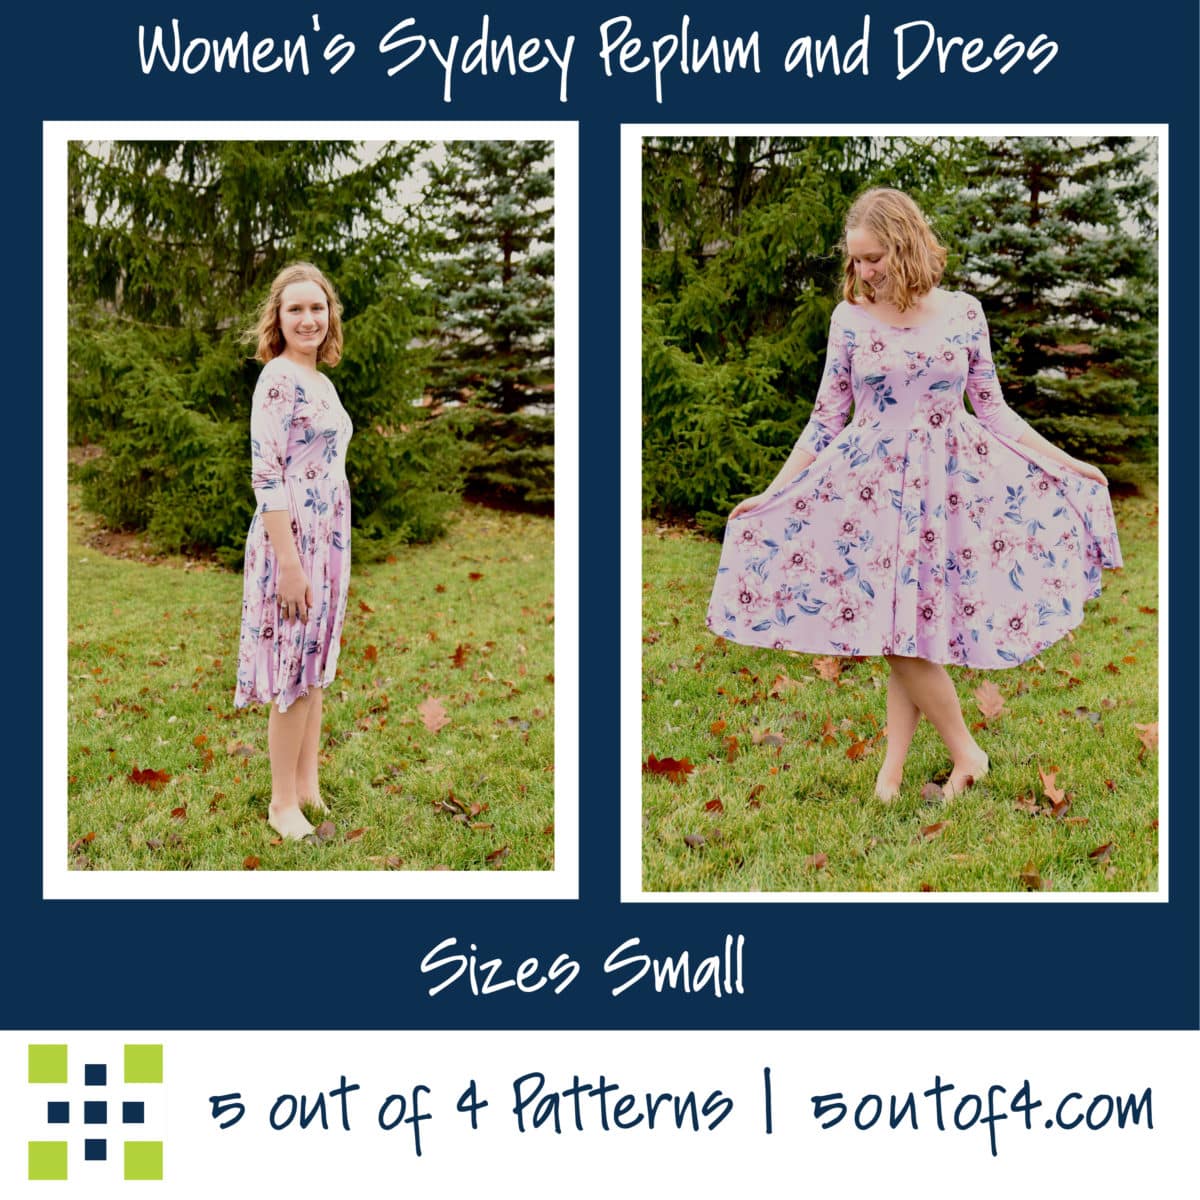 Sydney Peplum and Dress